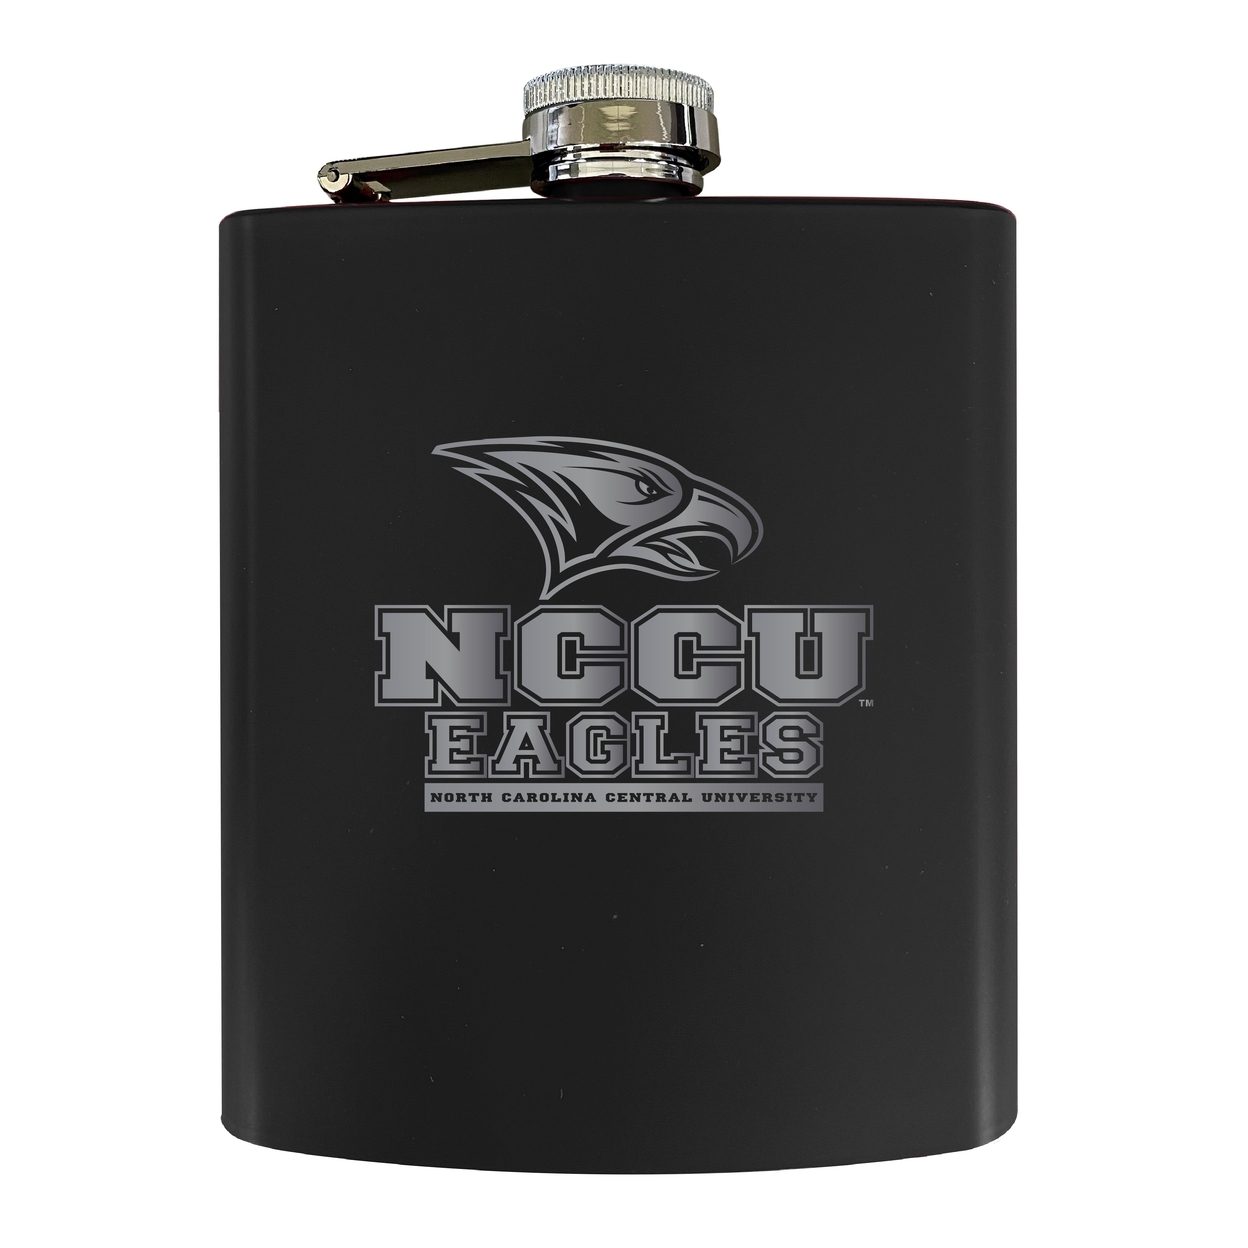 North Carolina Central Eagles Stainless Steel Etched Flask - Choose Your Color - Black